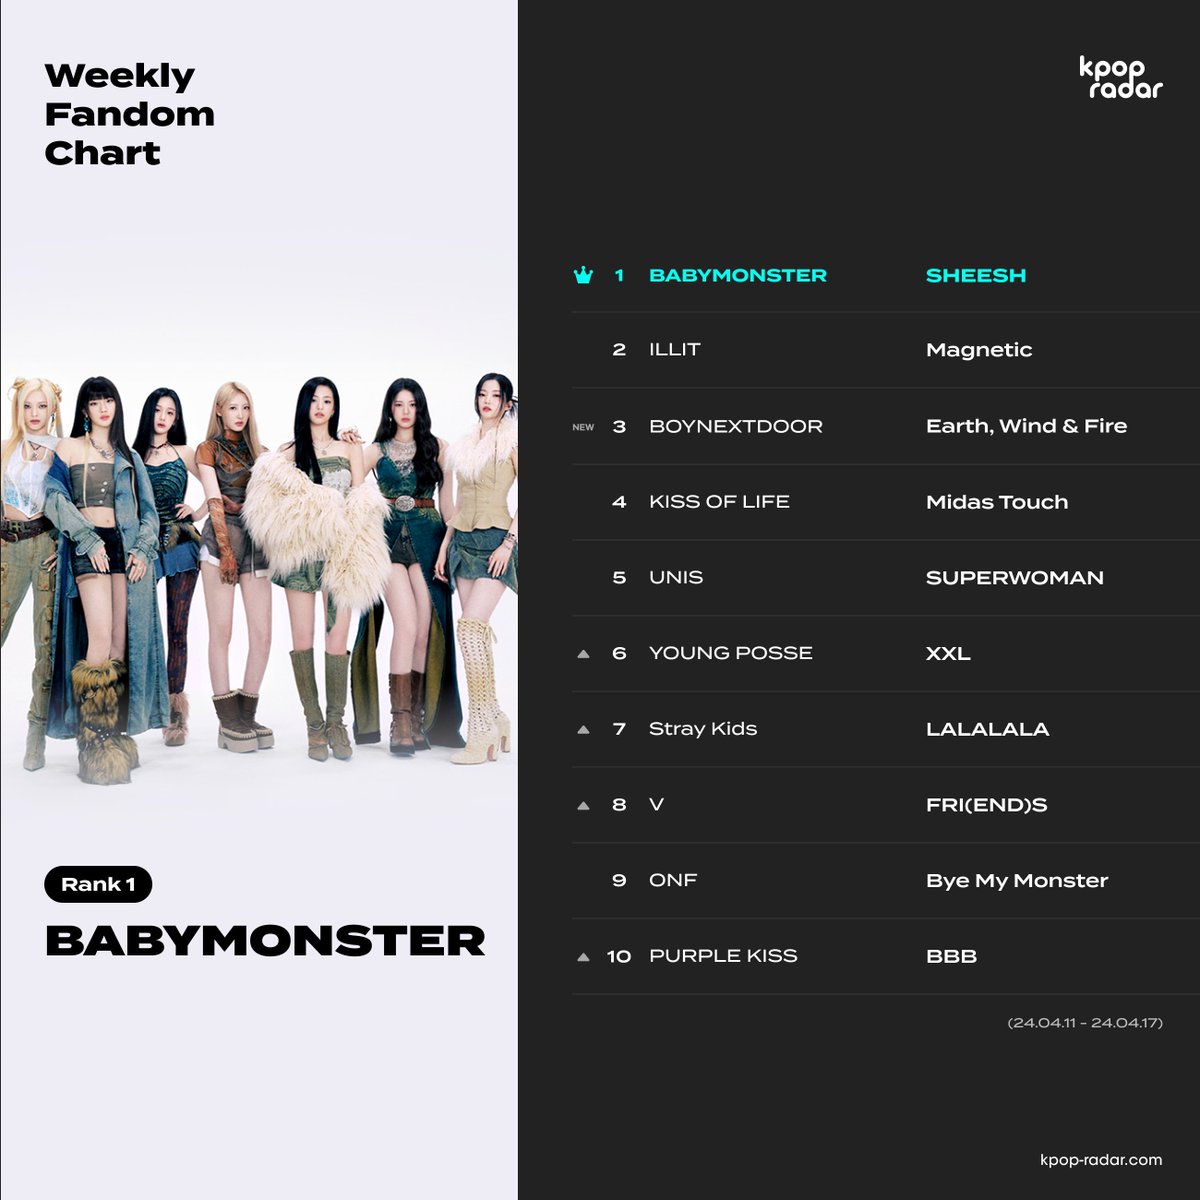 📡K-POP RADAR Weekly Fandom Chart Which artist had the biggest increase in fandom this week? 🥇#BABYMONSTER - #SHEESH 🥈#ILLIT - #Magnetic 🥉#BOYNEXTDOOR - #BOYNEXTDOOR_EWF #kpopradar #weeklyfandomchart #kpop